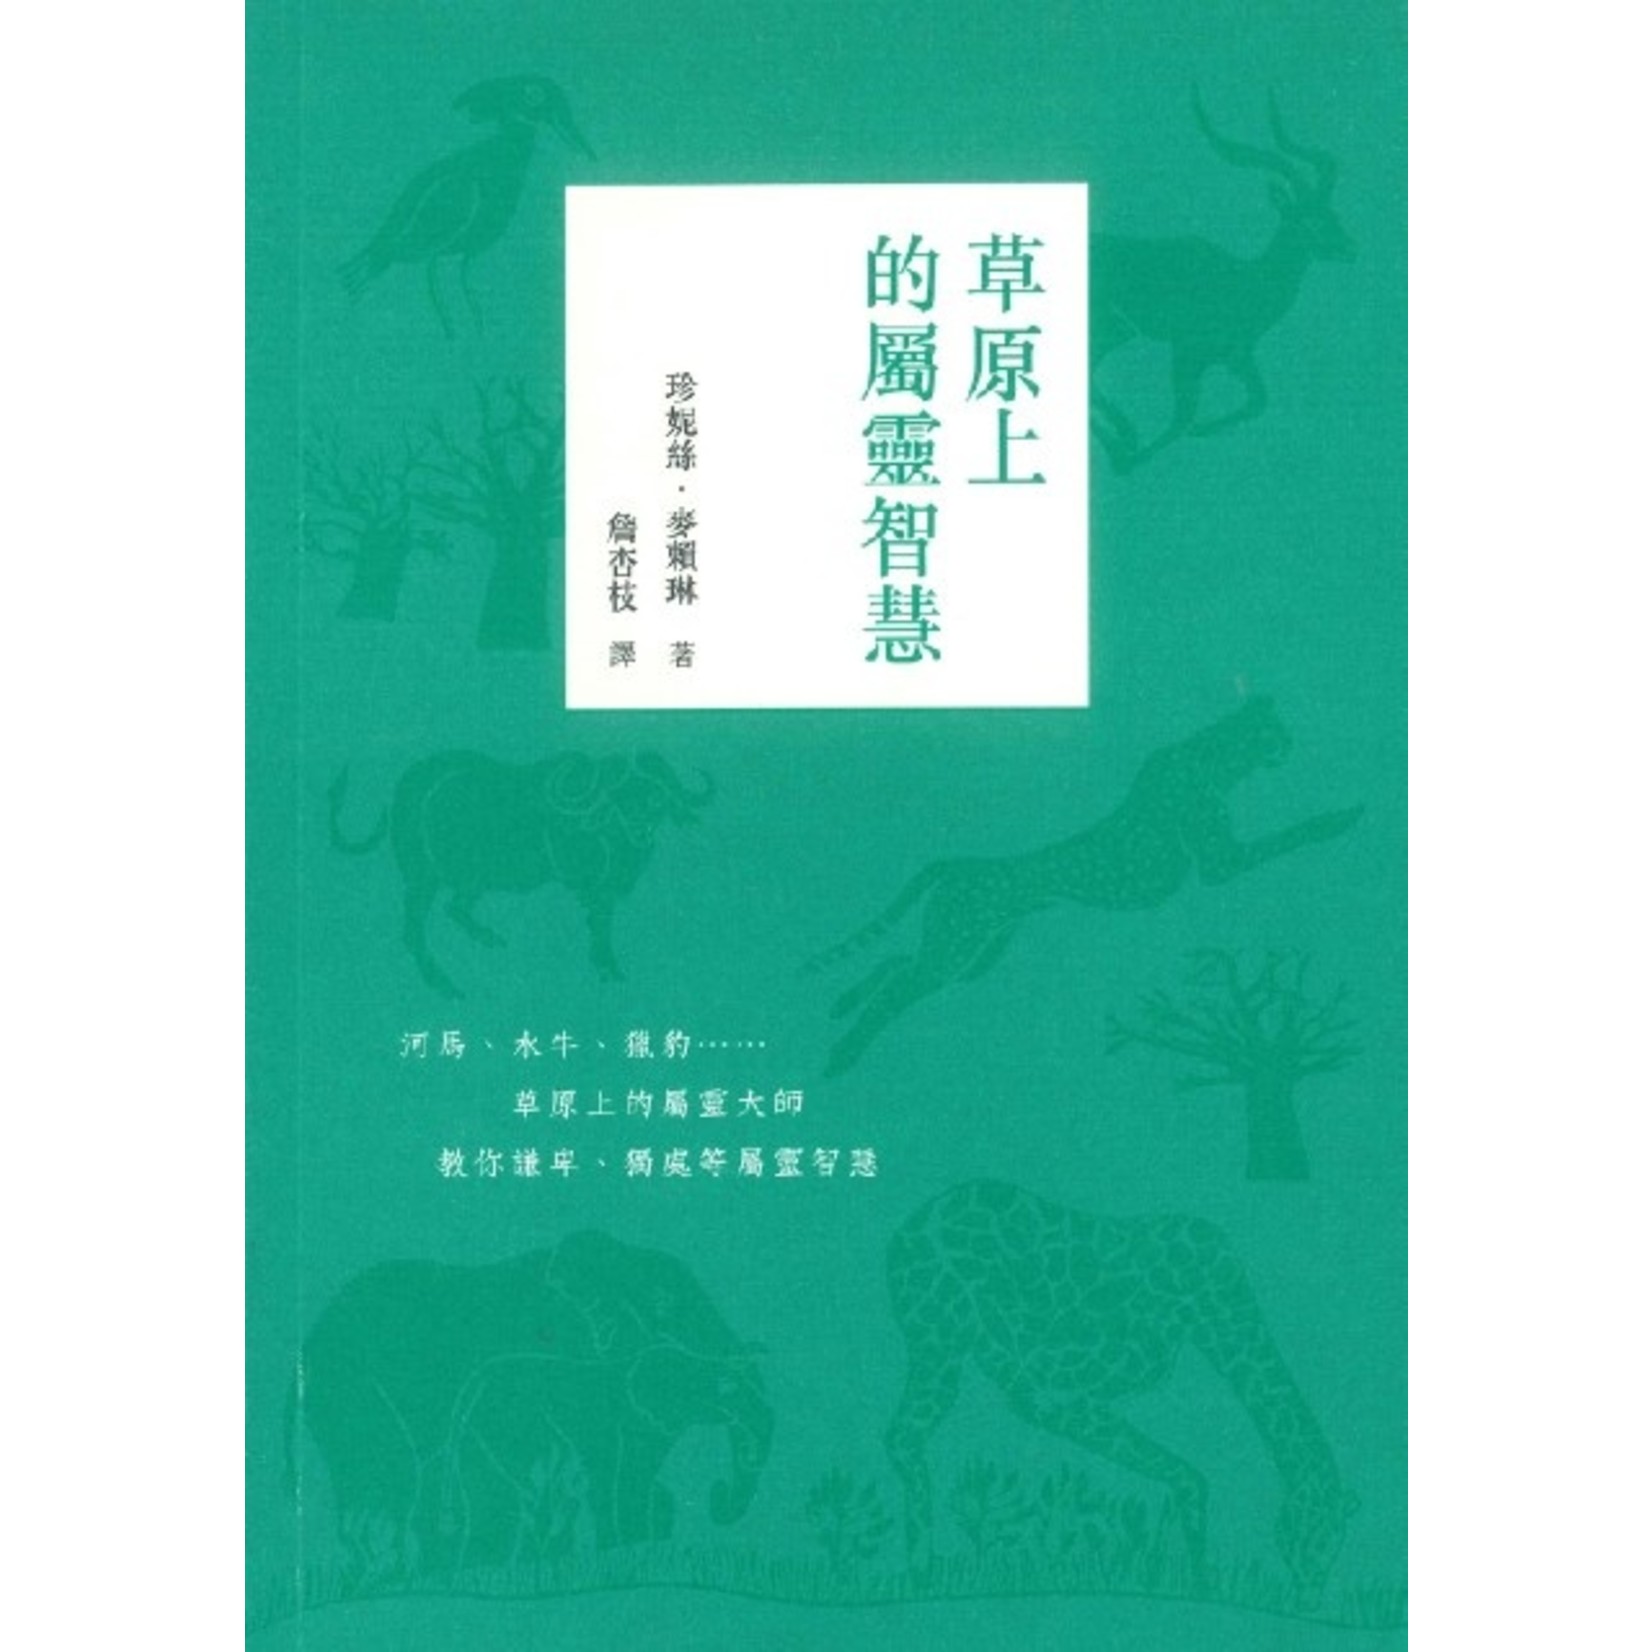 基督教文藝(香港) Chinese Christian Literature Council 草原上的屬靈智慧 | Ostriches, Dung Beetles, and Other Spiritual Masters: a Book of Wisdom from the Wild